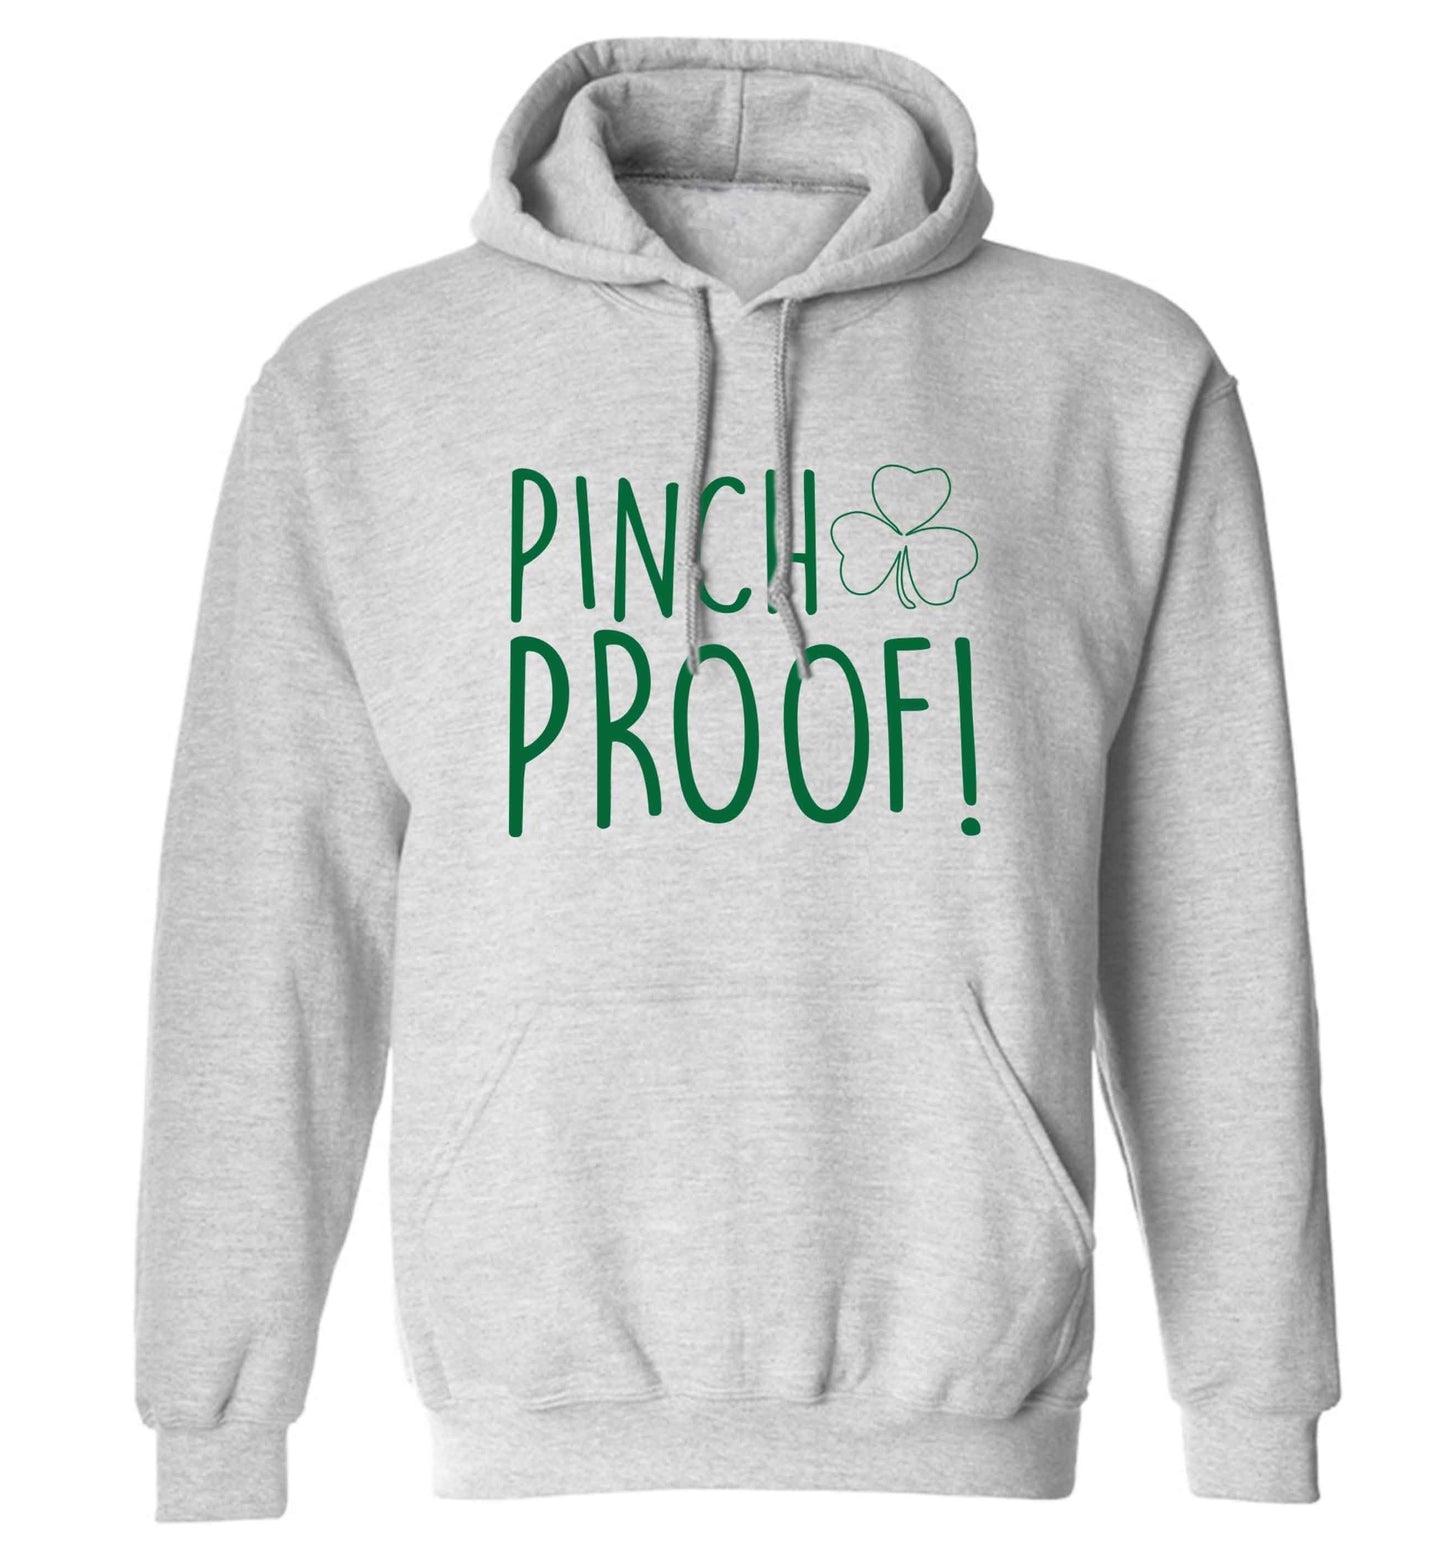 Pinch Proof adults unisex grey hoodie 2XL